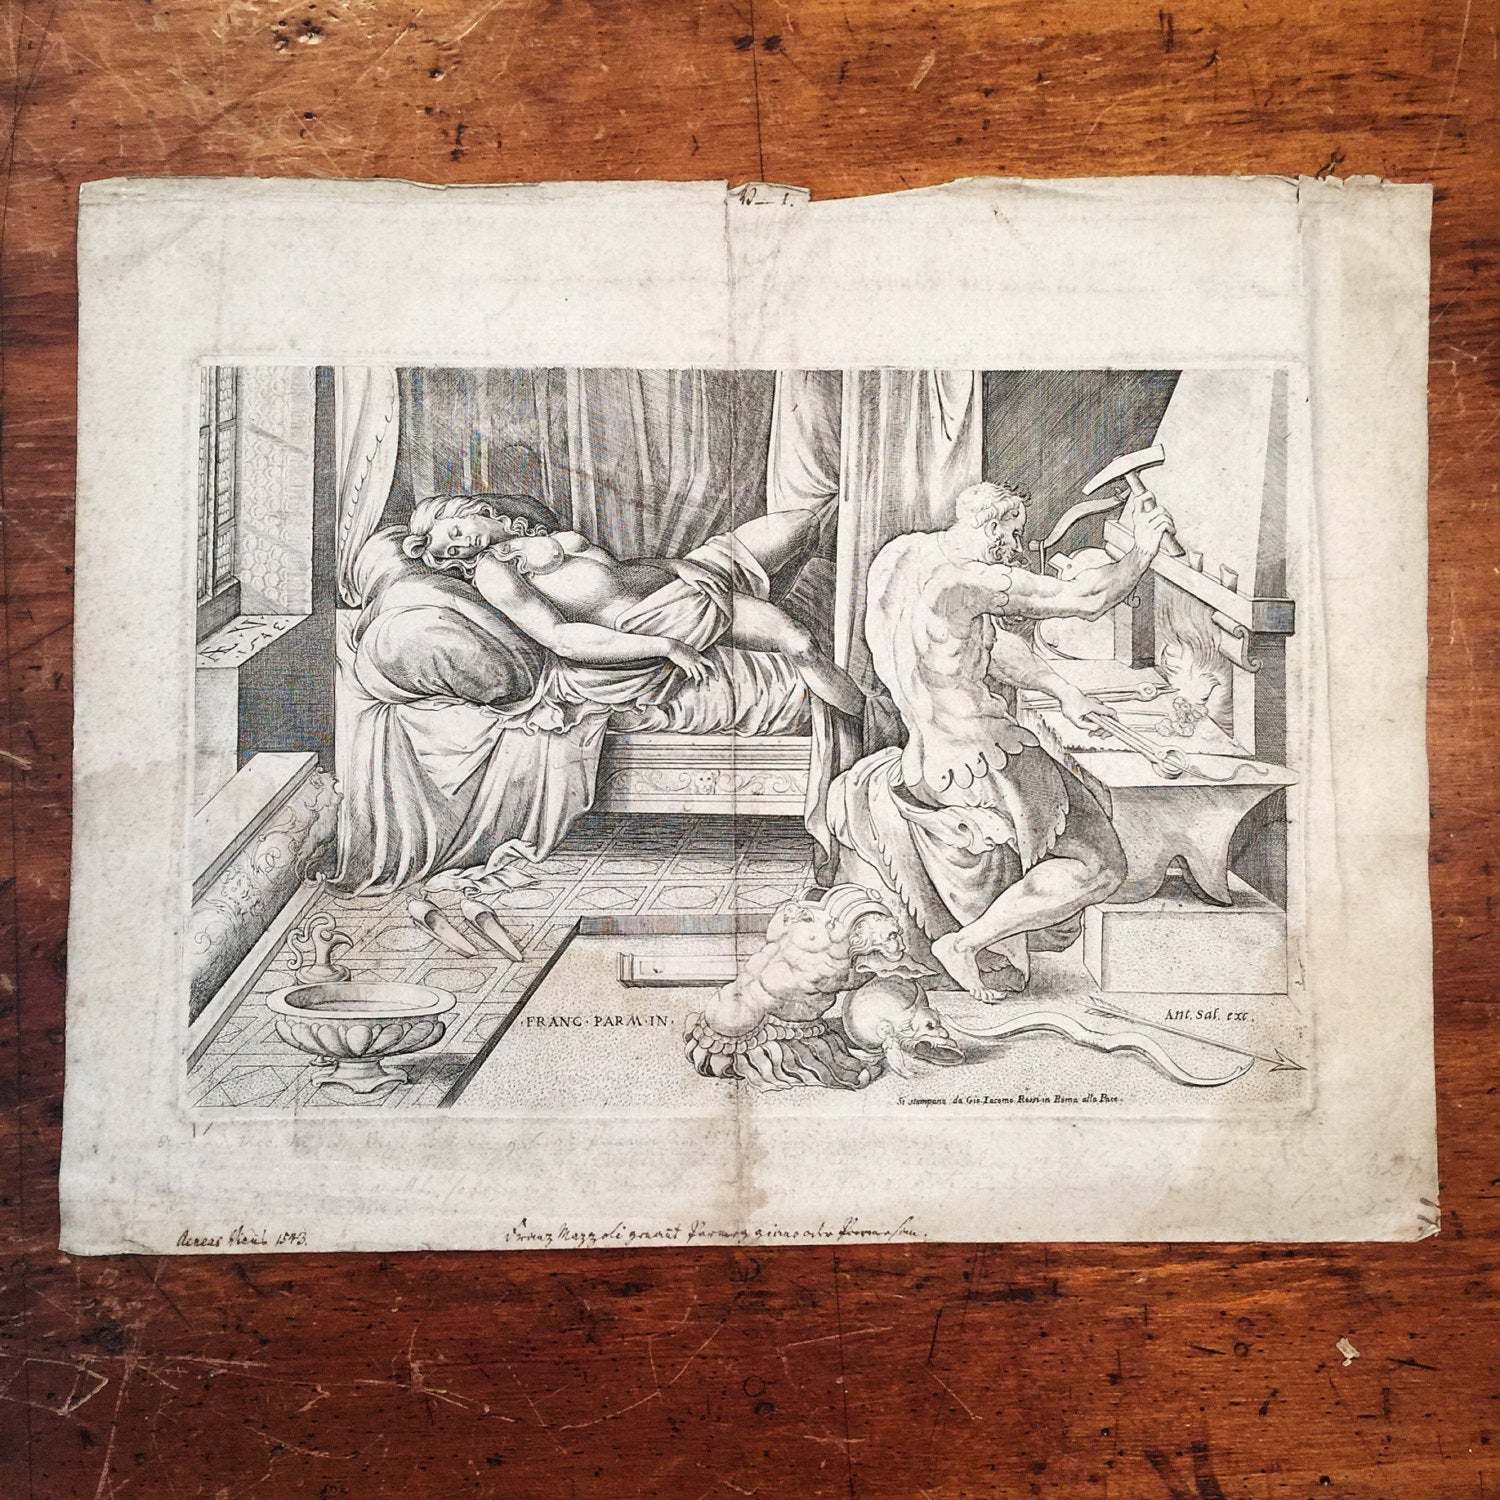 Enea Vico Engraving Print after Parmigianino - Venus and Vulcan - Censored Version - Late 1500's  - Rare